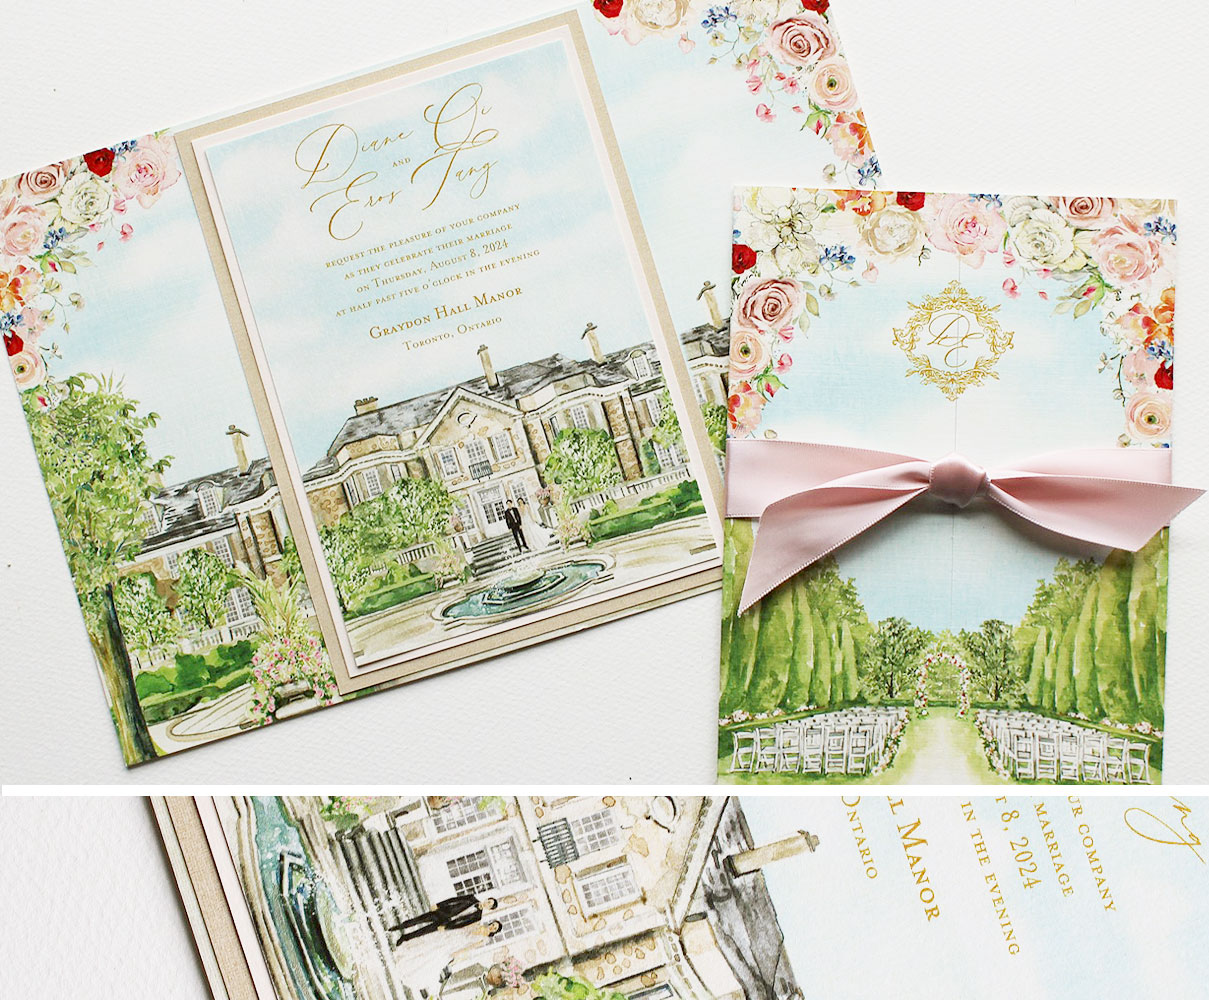 Graydon Hall Manor Custom Wedding Invitations